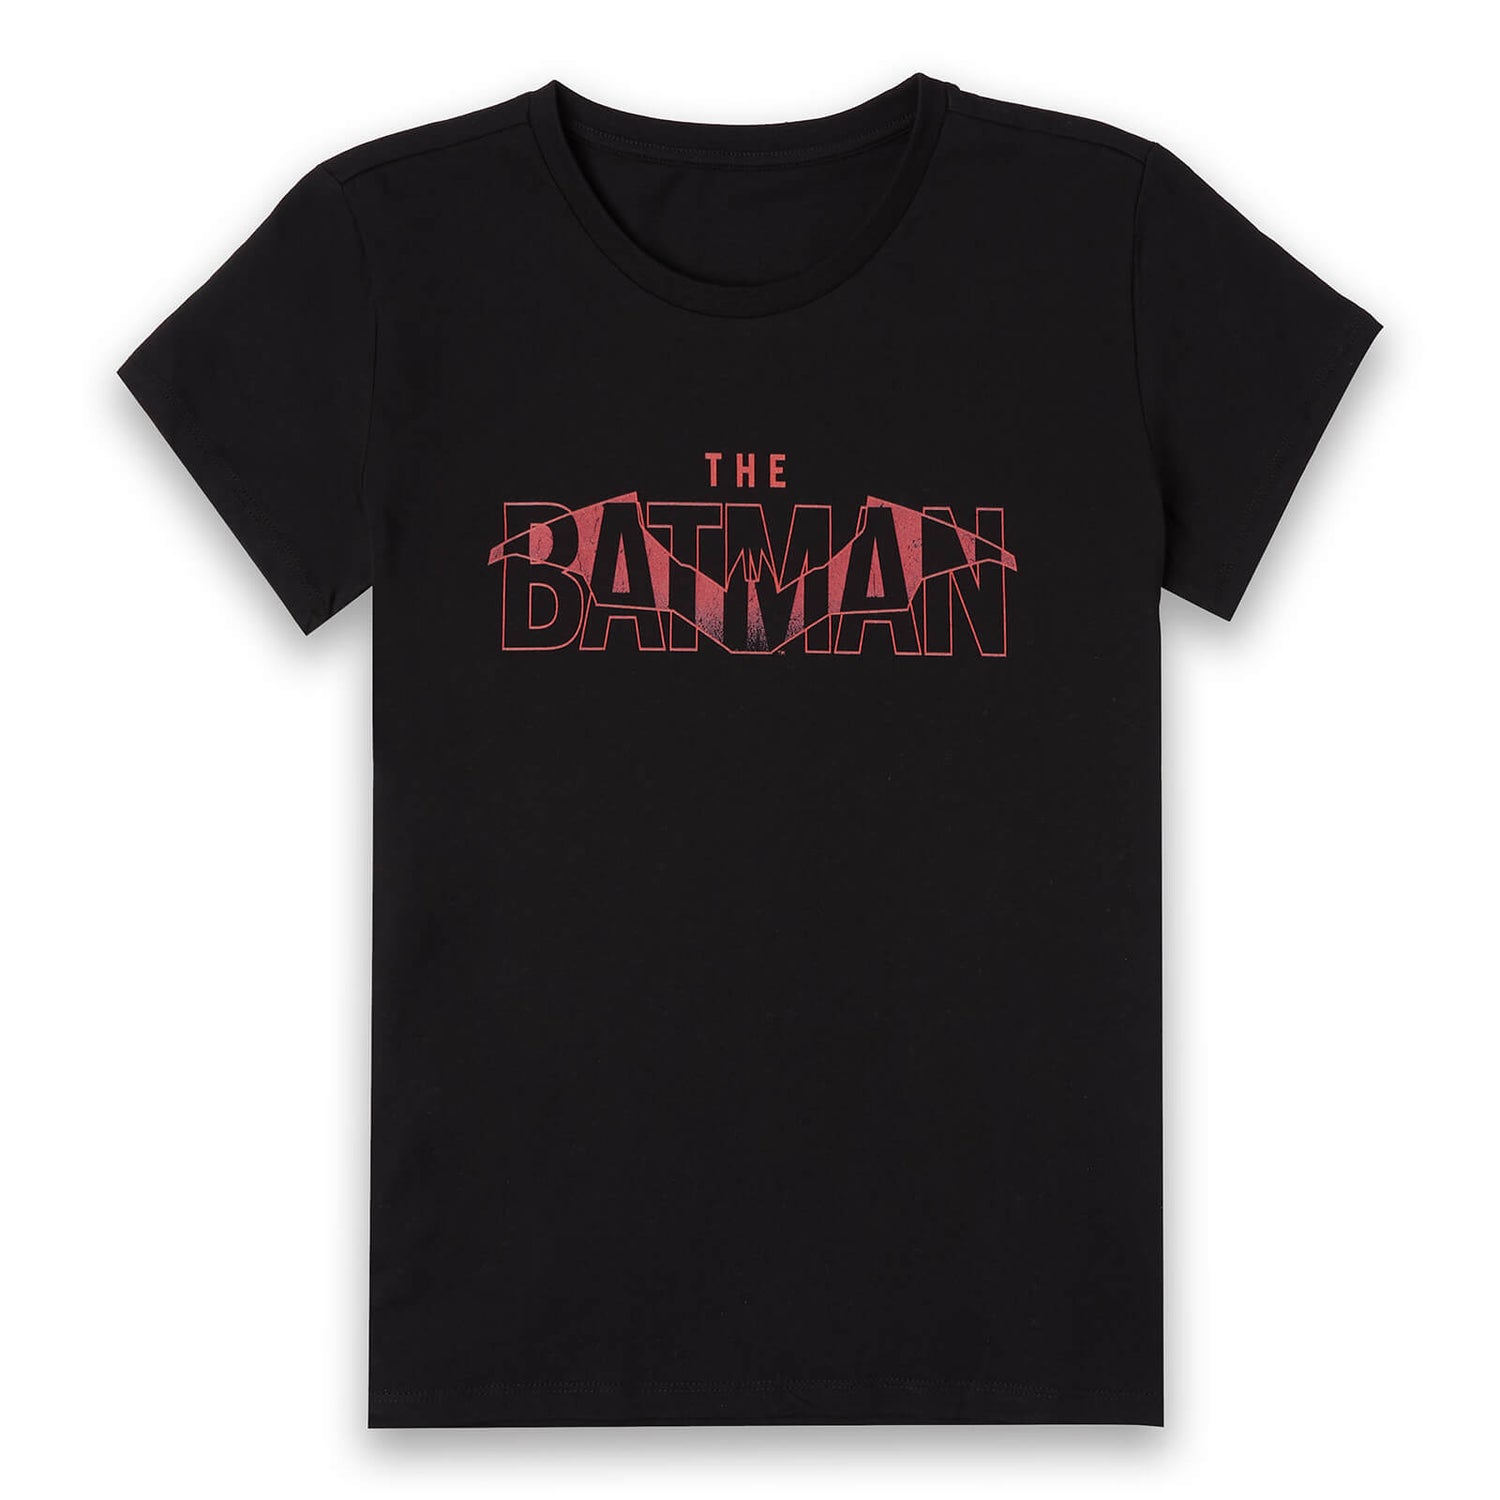 Details about   Nightwing Symbol Women's T-Shirt Black 